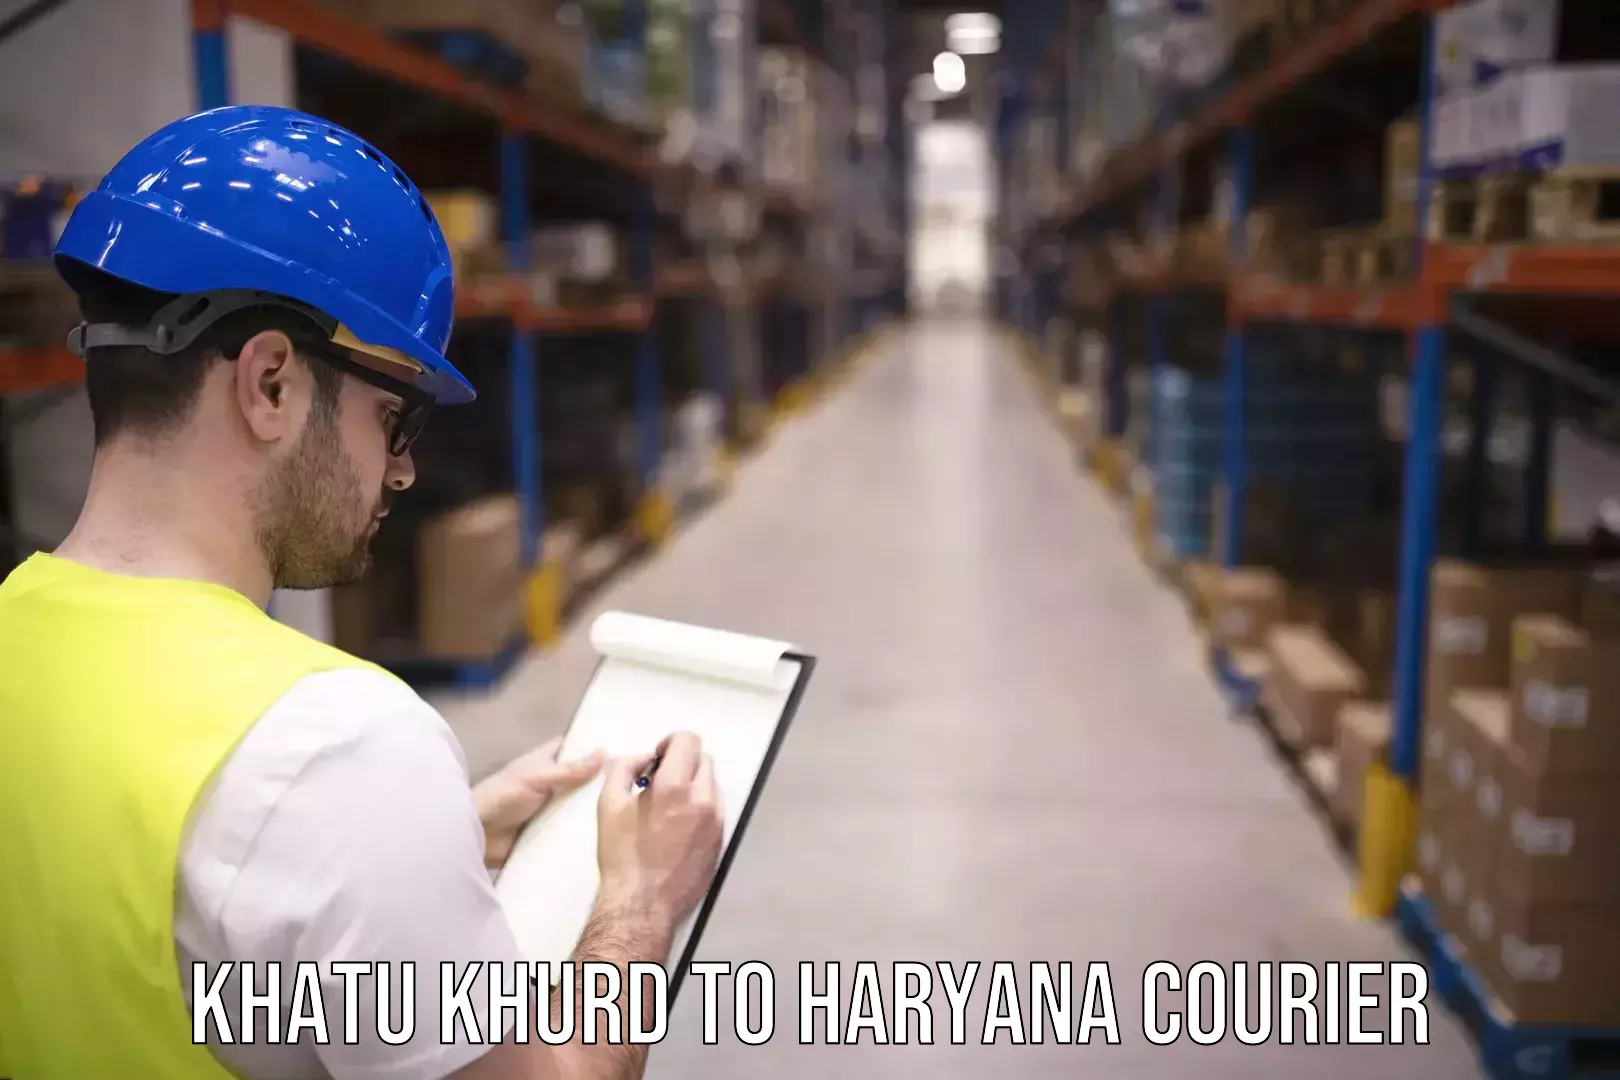 Courier service comparison in Khatu Khurd to Hansi